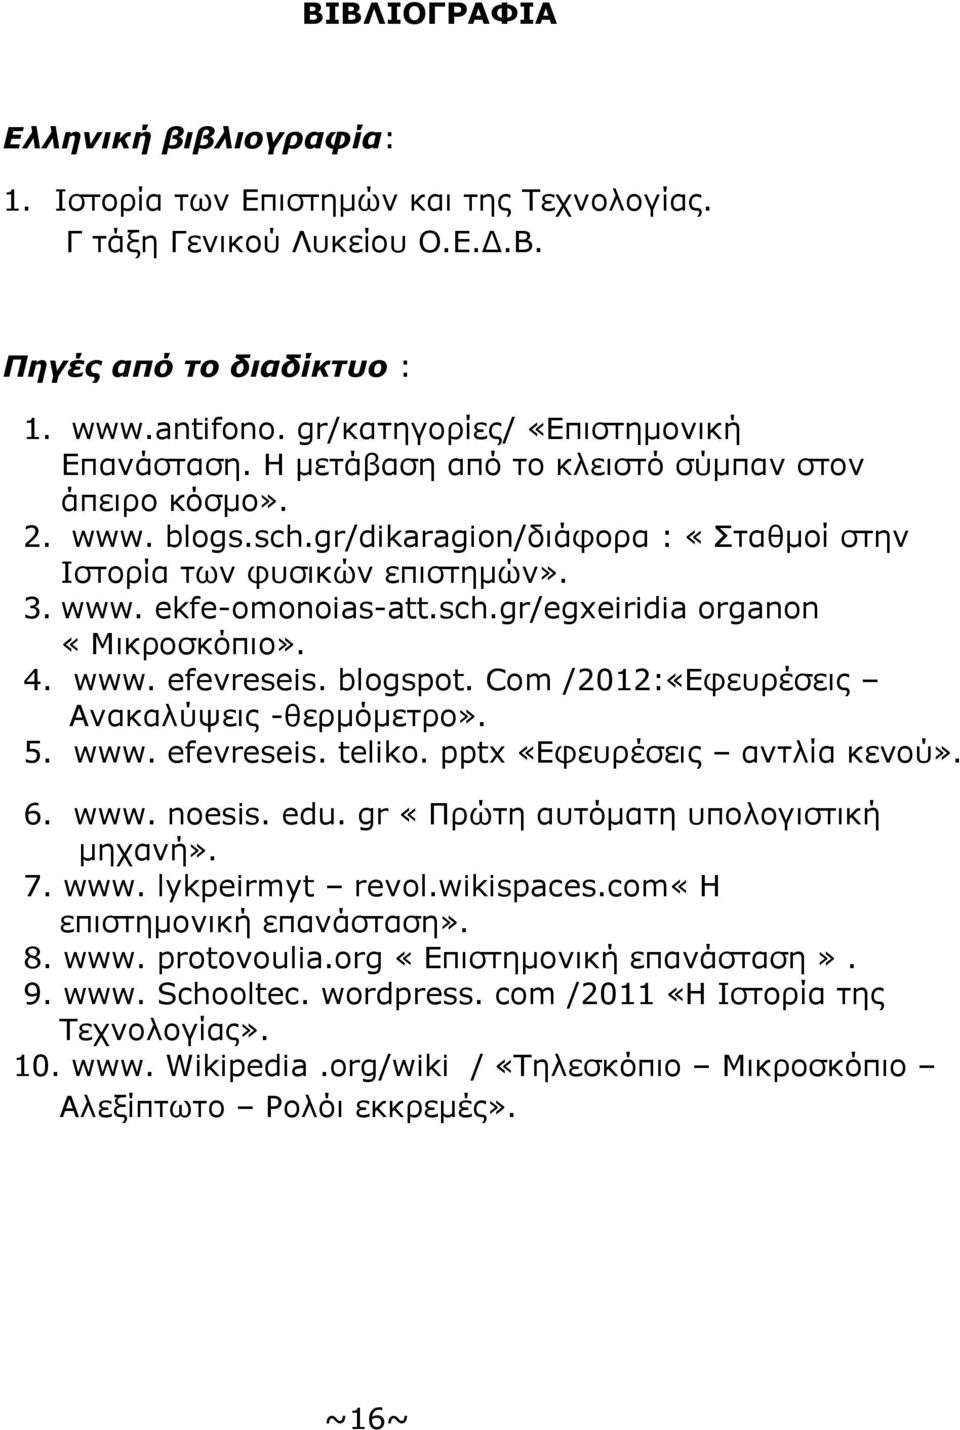 4. www. efevreseis. blogspot. Com /2012:«Εφευρέσεις Ανακαλύψεις -θερμόμετρο». 5. www. efevreseis. teliko. pptx «Εφευρέσεις αντλία κενού». 6. www. noesis. edu. gr «Πρώτη αυτόματη υπολογιστική μηχανή».